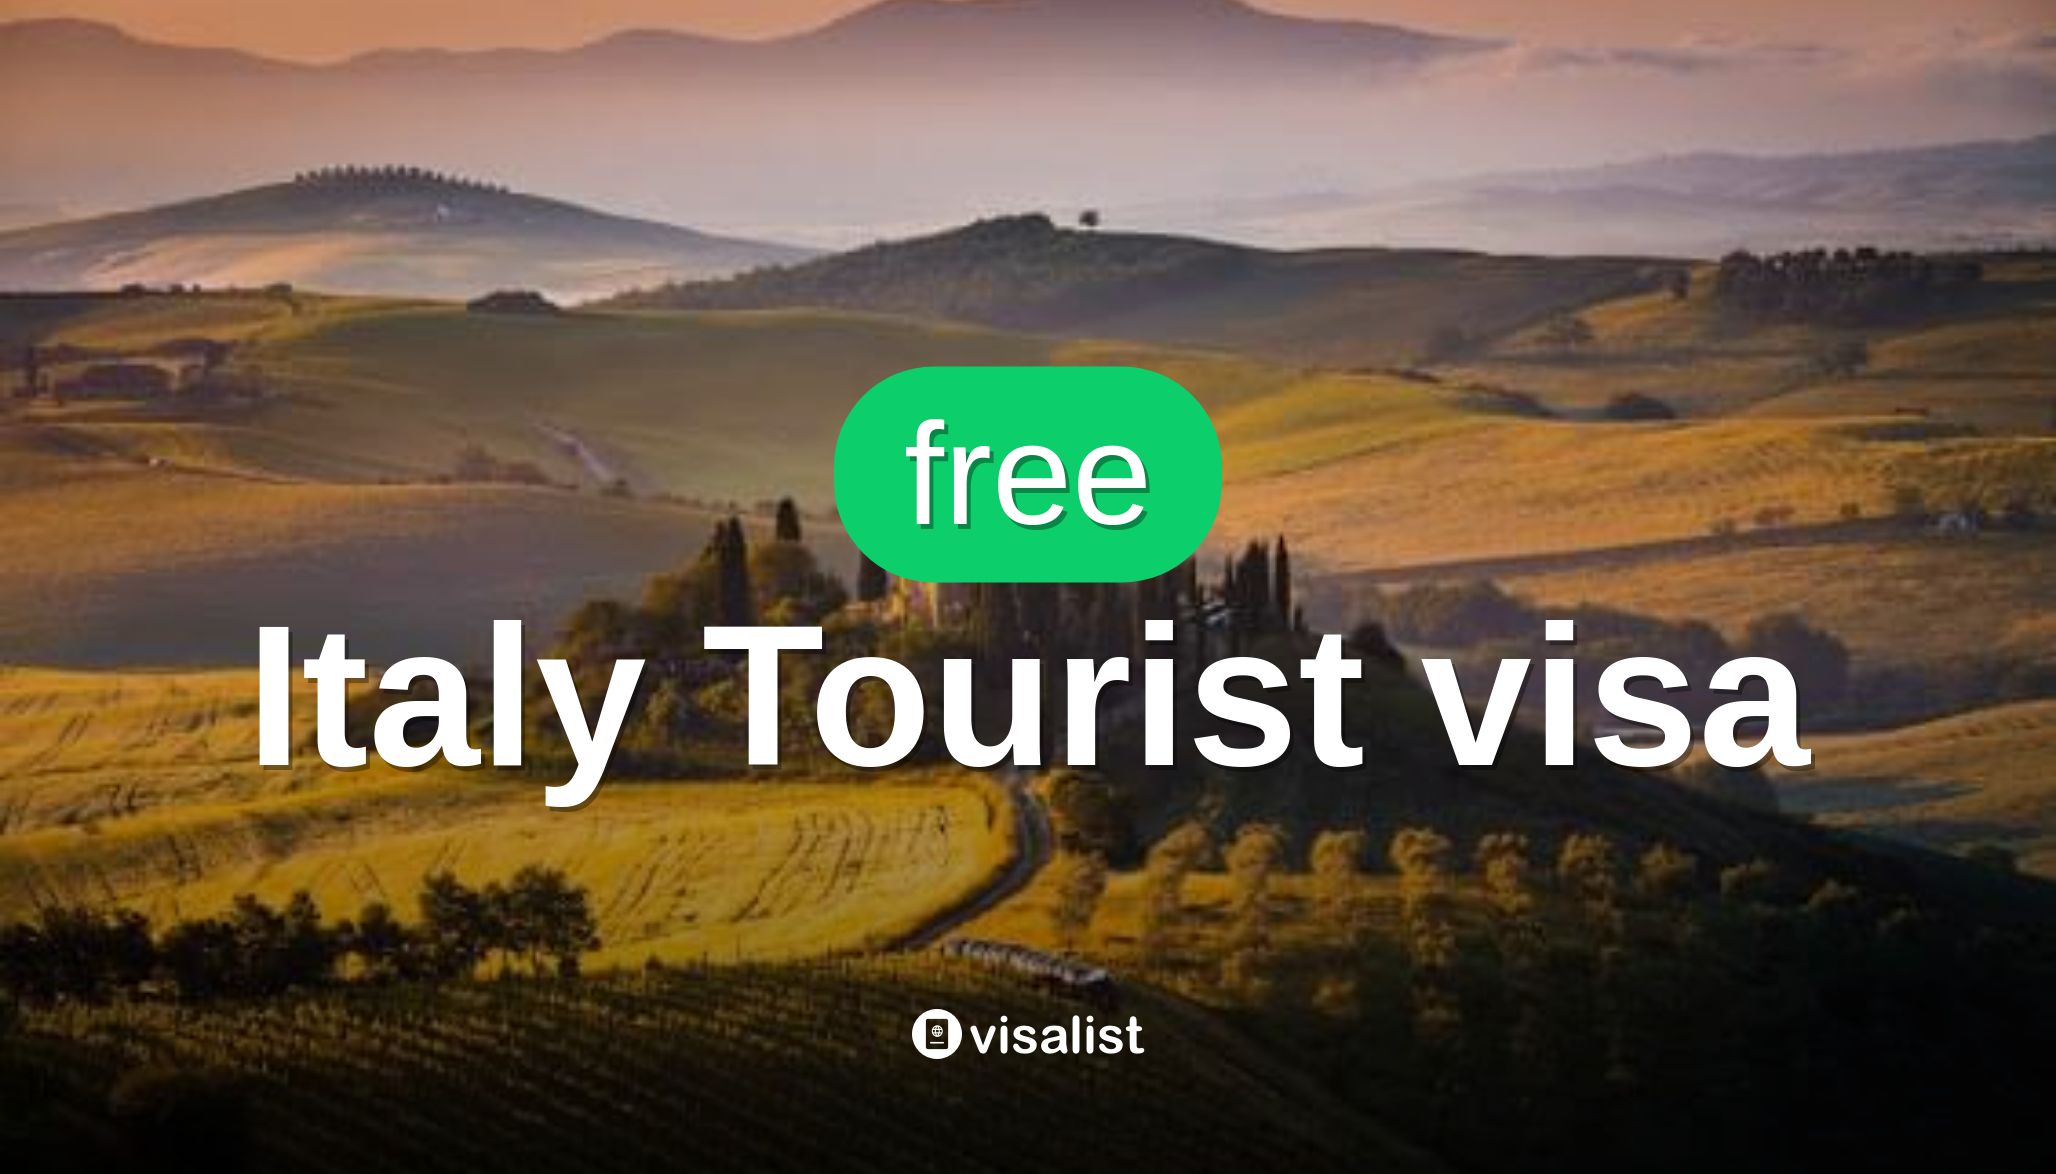 australia visa to visit italy